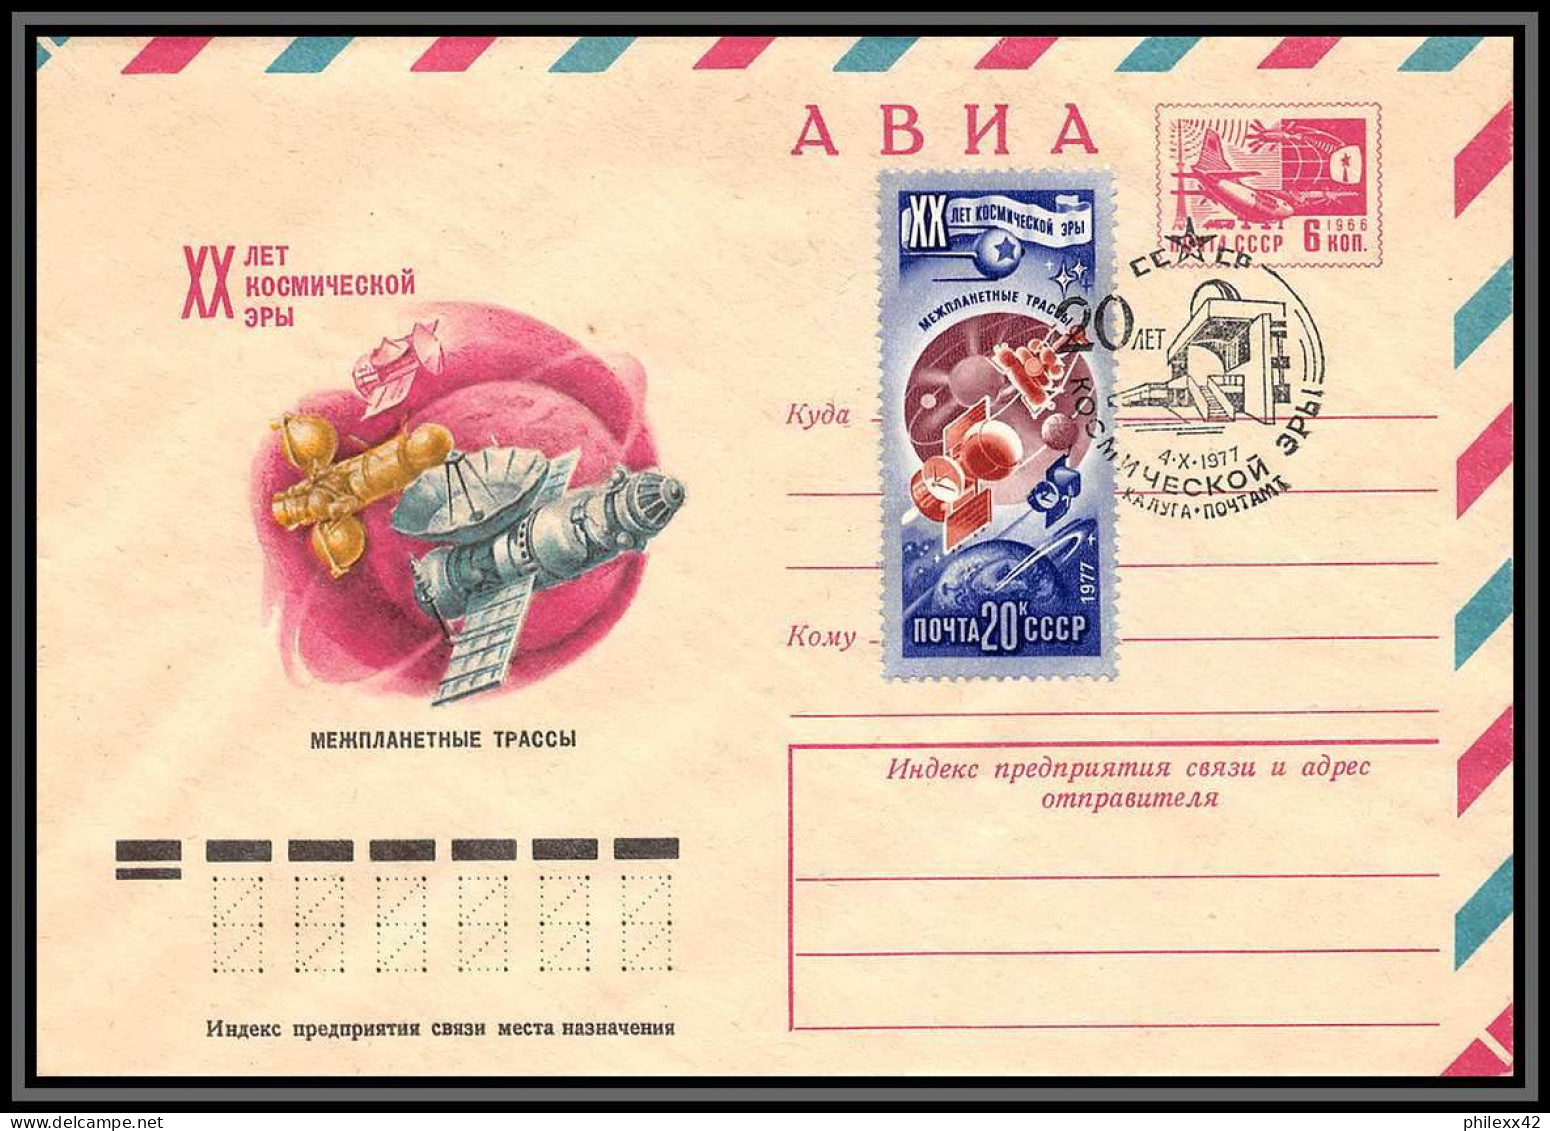 3392 Espace Space Entier Postal Stationery Urss USSR 4404/4409 Gagarine Gagarin Soyuz Soyouz 4/10/1977 Fdc + Timbres - Russie & URSS